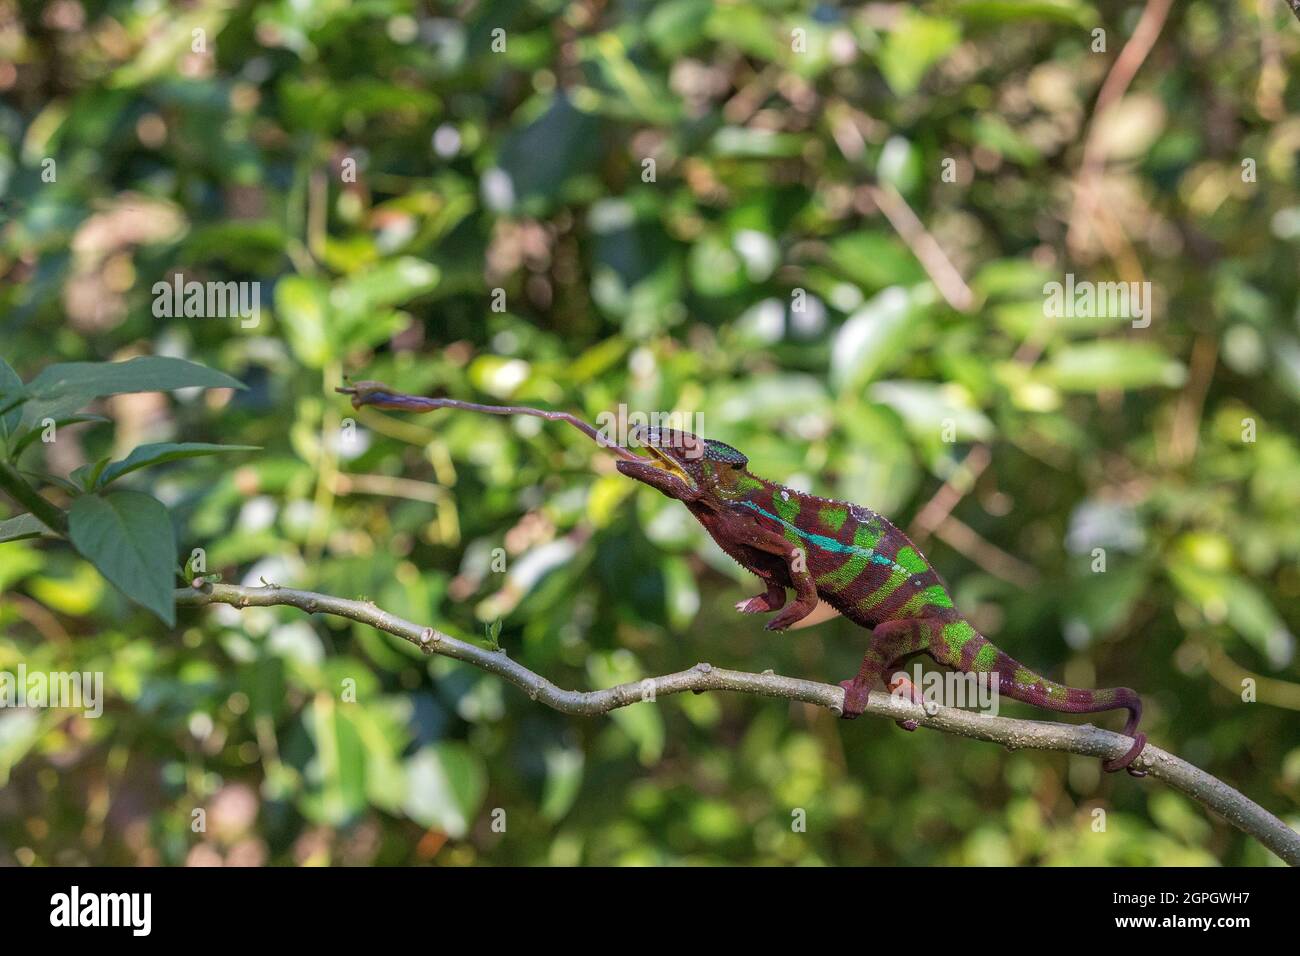 Madagascar, East, a panther chameleon (Furcifer pardalis) Stock Photo